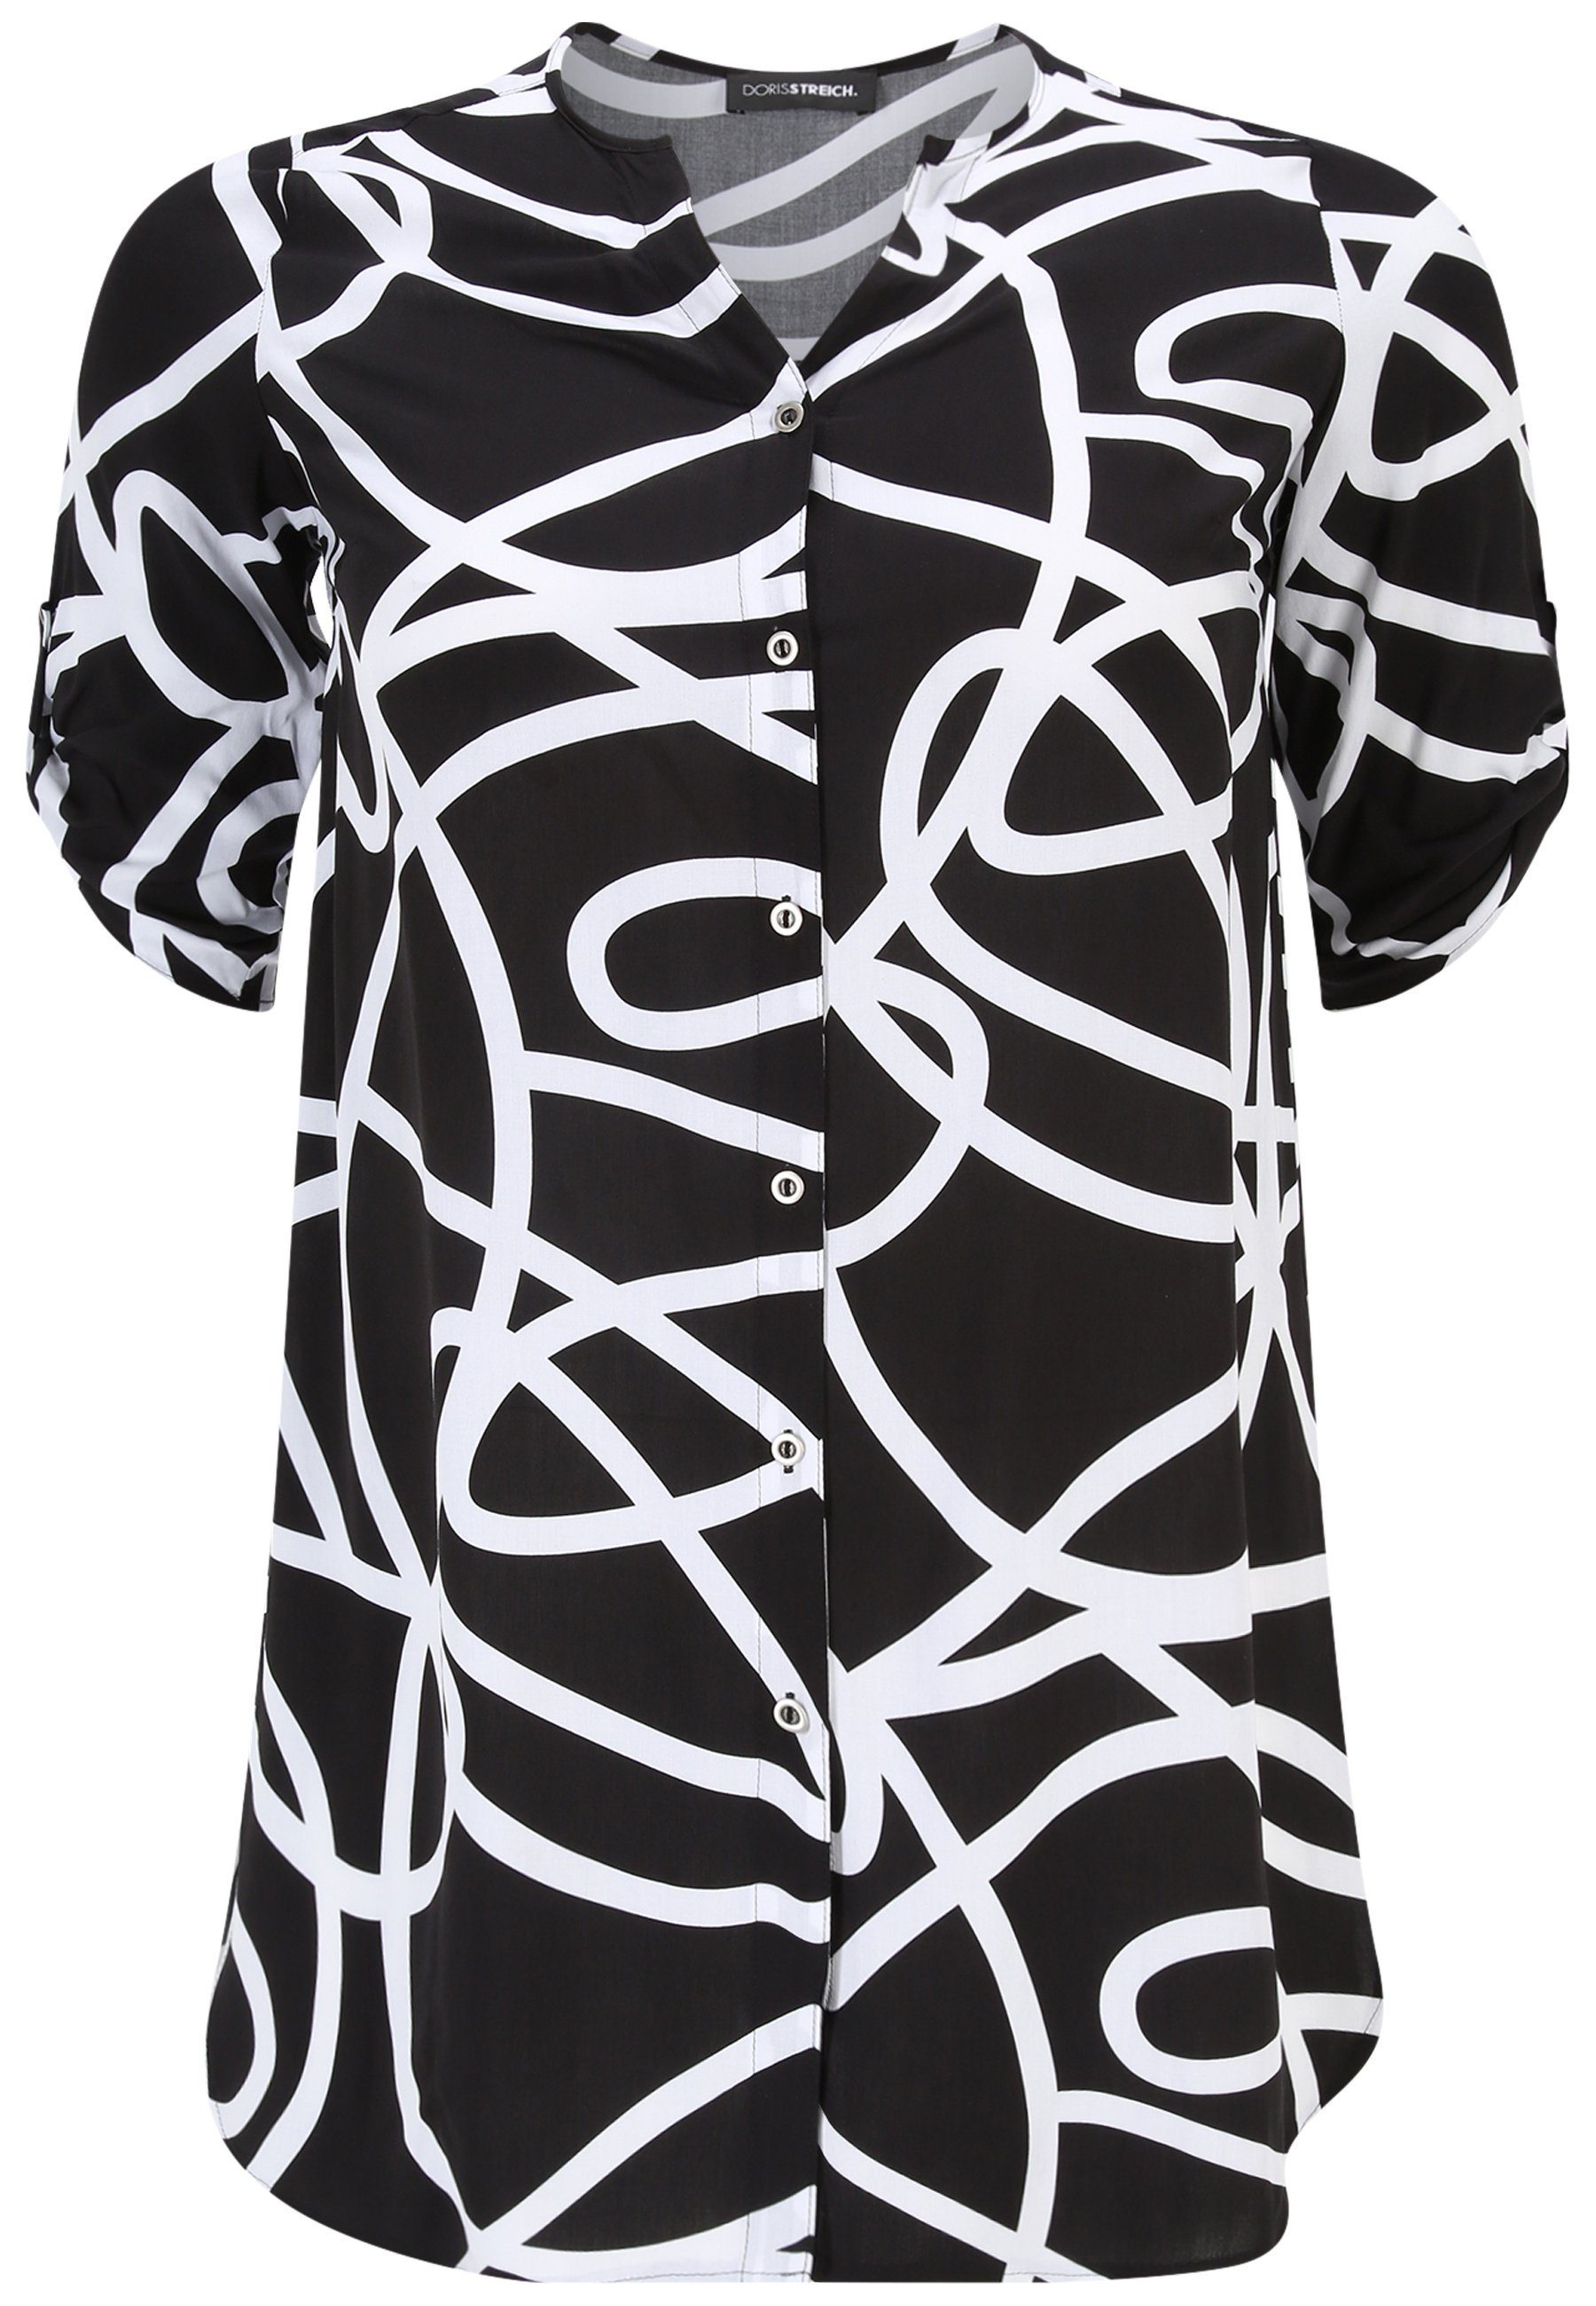 Doris Streich Longbluse Longbluse aus Viskose mit Grafik-Print mit modernem Design